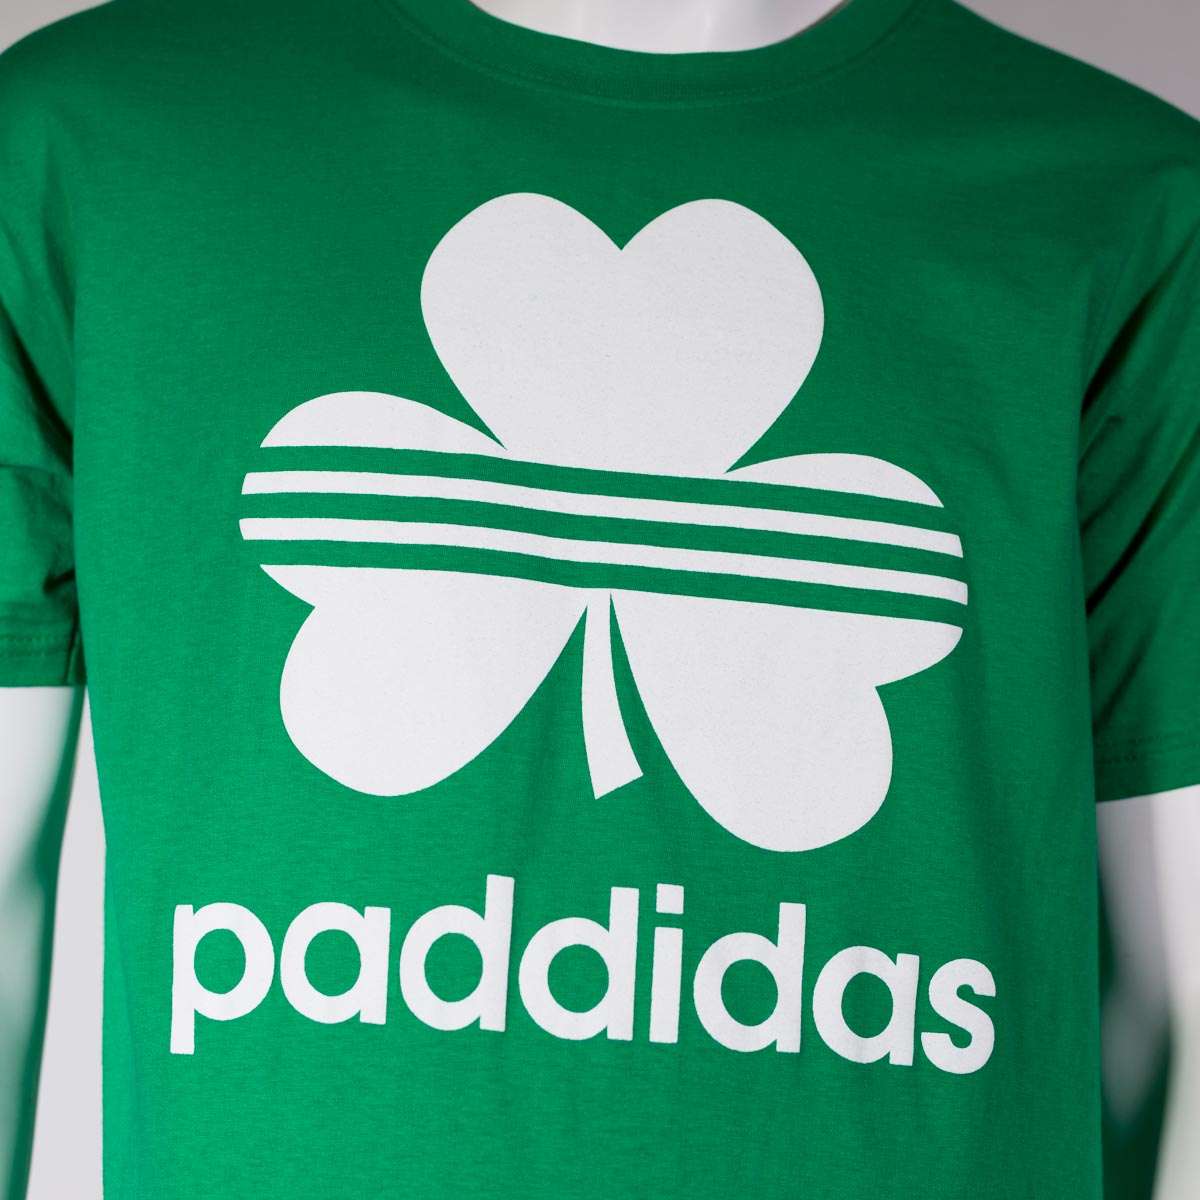 Paddidas Green Shamrock Shirt - Zhivago Gifts